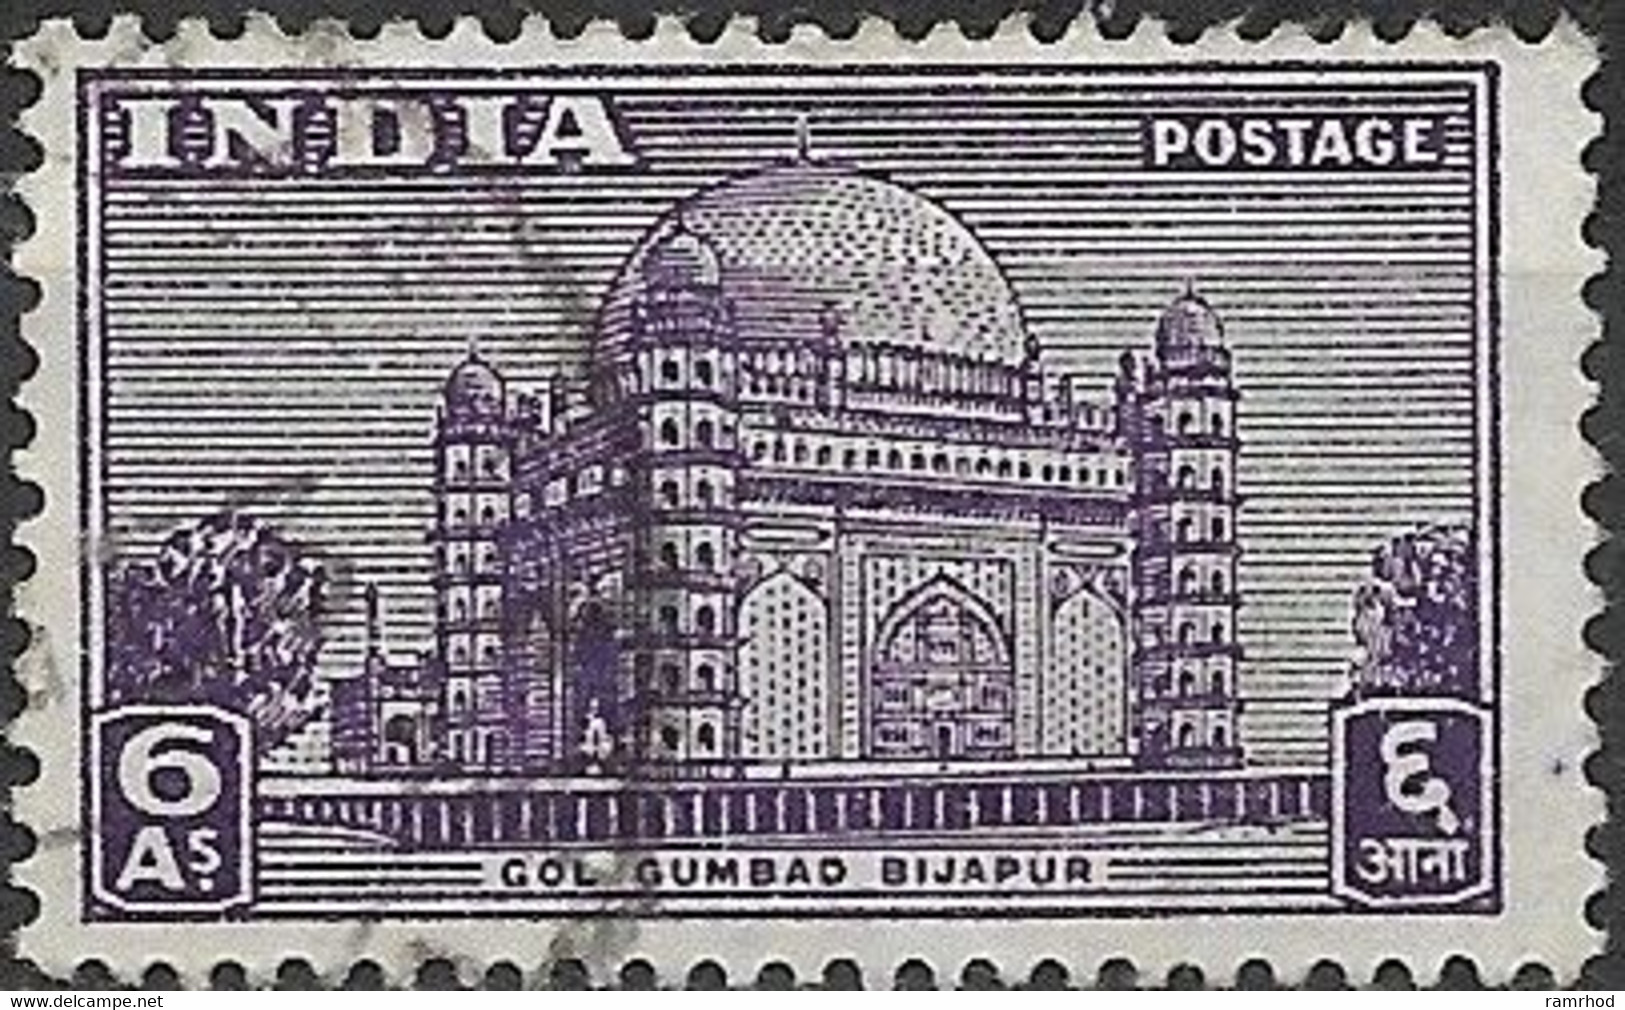 INDIA 1949 Gol Gumbad, Bijapur - 6a - Violet FU - Gebraucht